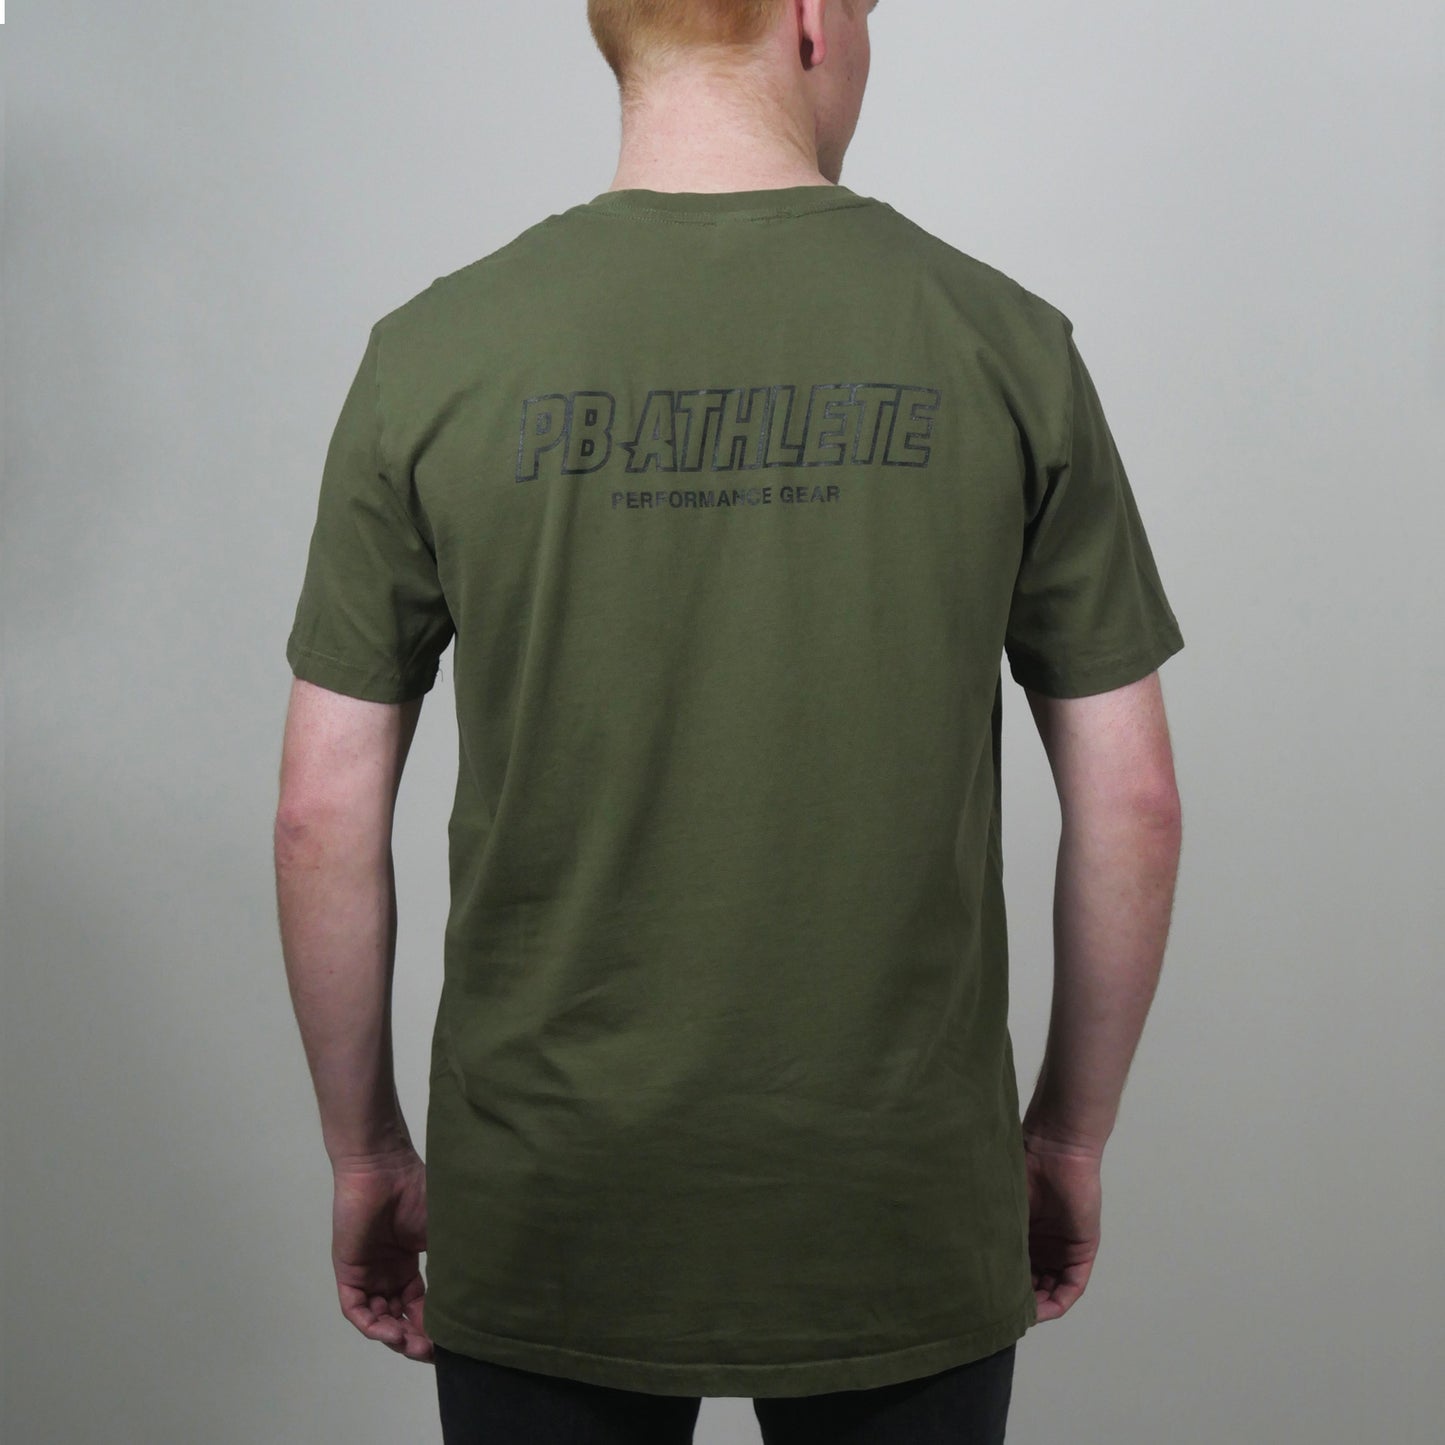 Performance Gear T-Shirt - Army